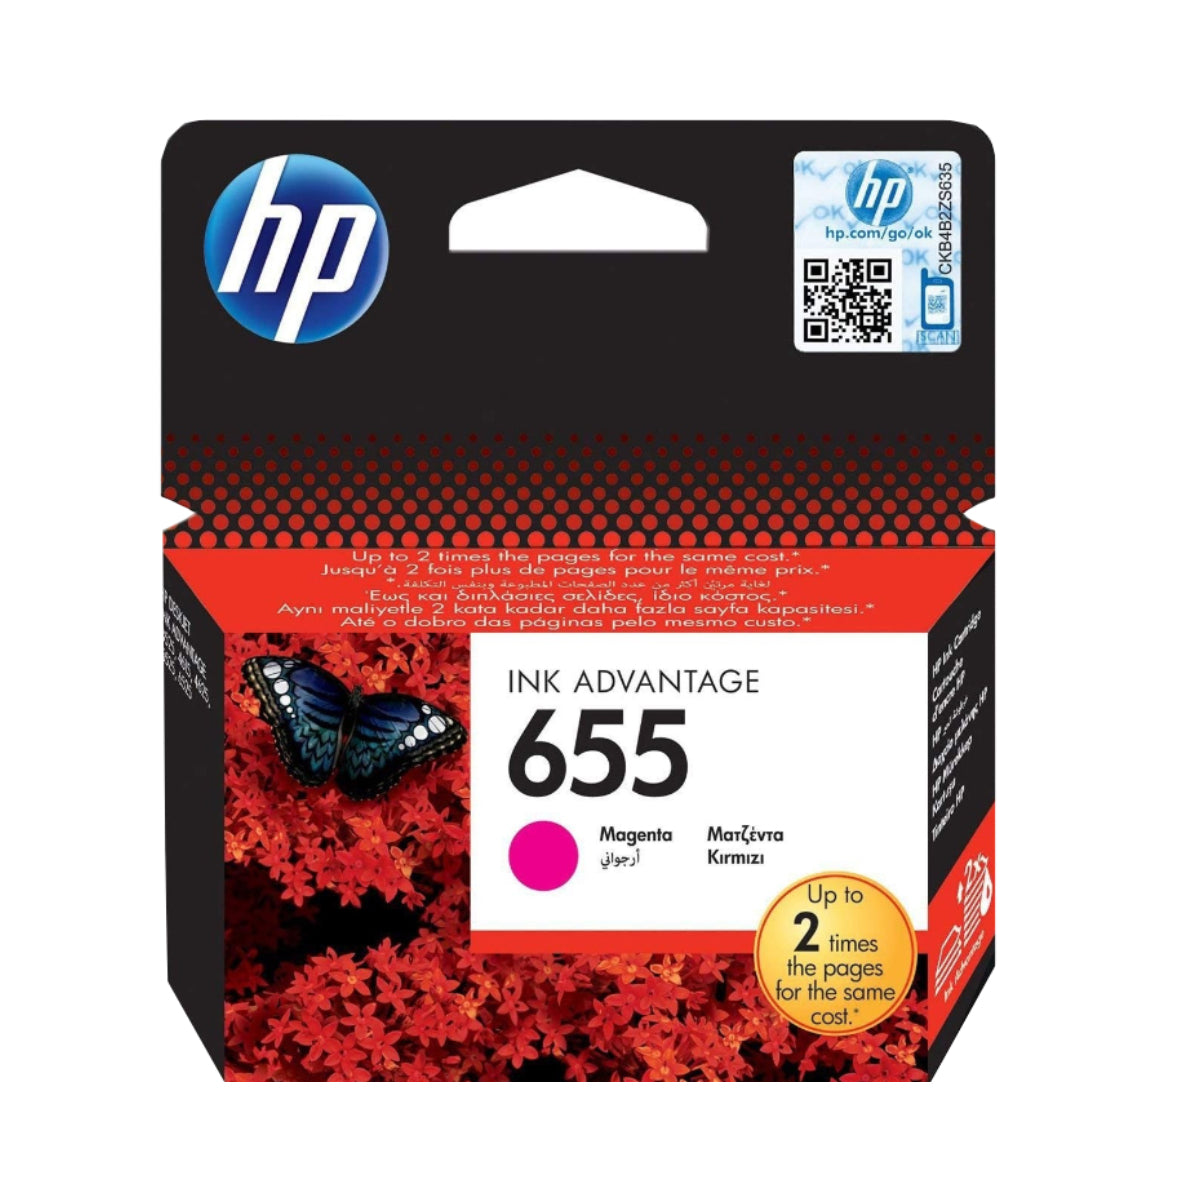 HP 655 Magenta Ink Cartridge - CZ111AE